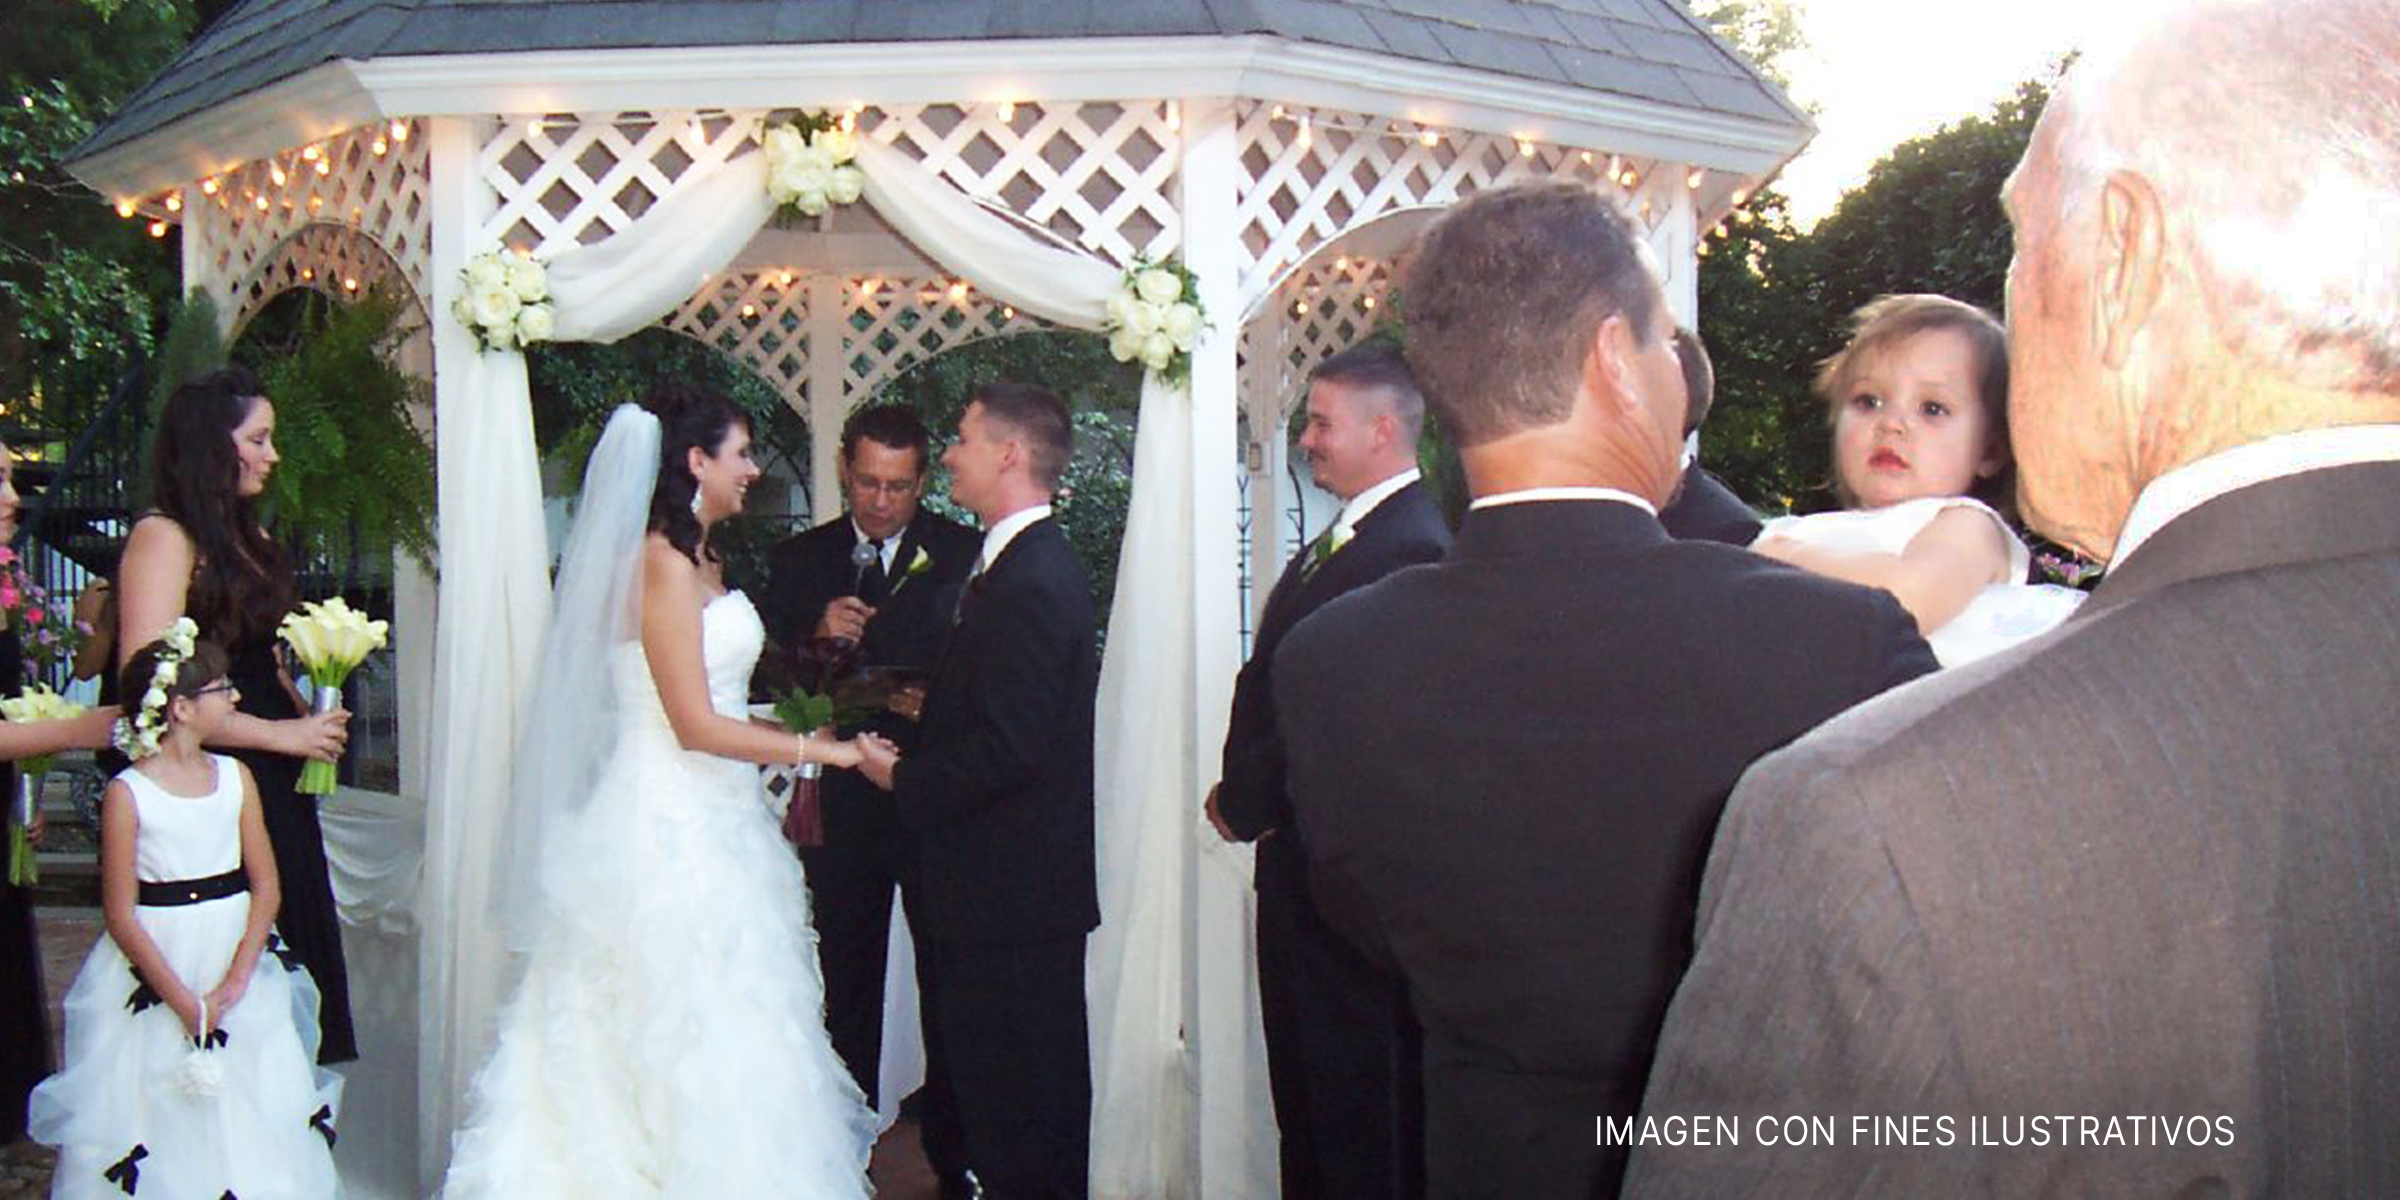 Ceremonia de casamiento. | Foto: Flickr.com/aresauburn (CC BY-SA 2.0)